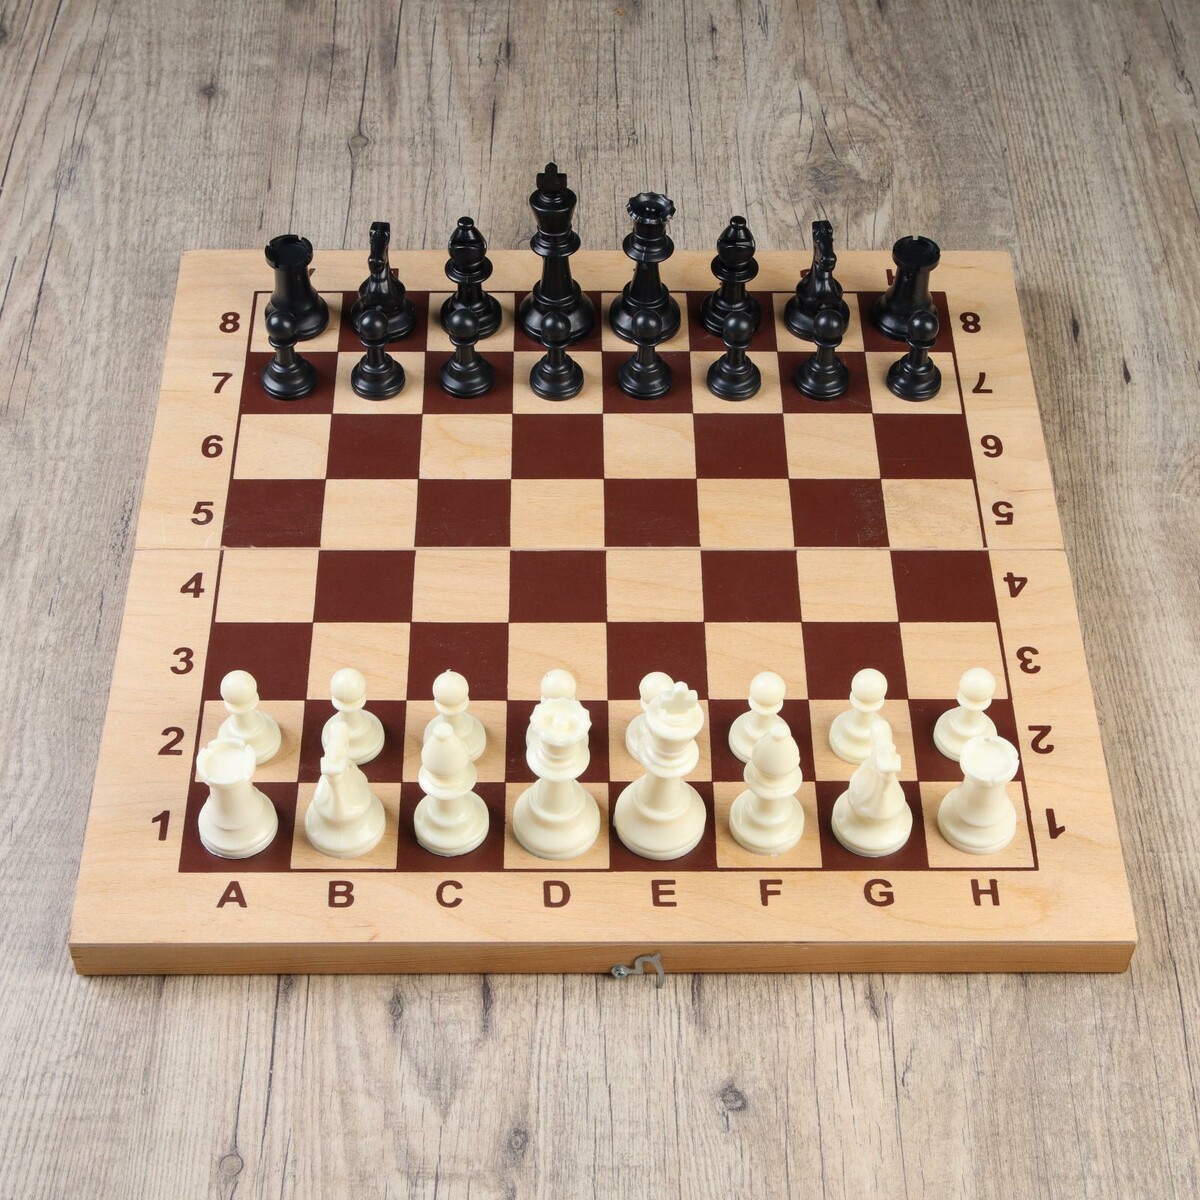 Шахматные фигуры, пластик, король h-9.5 см, пешка h-4.5 см железный король